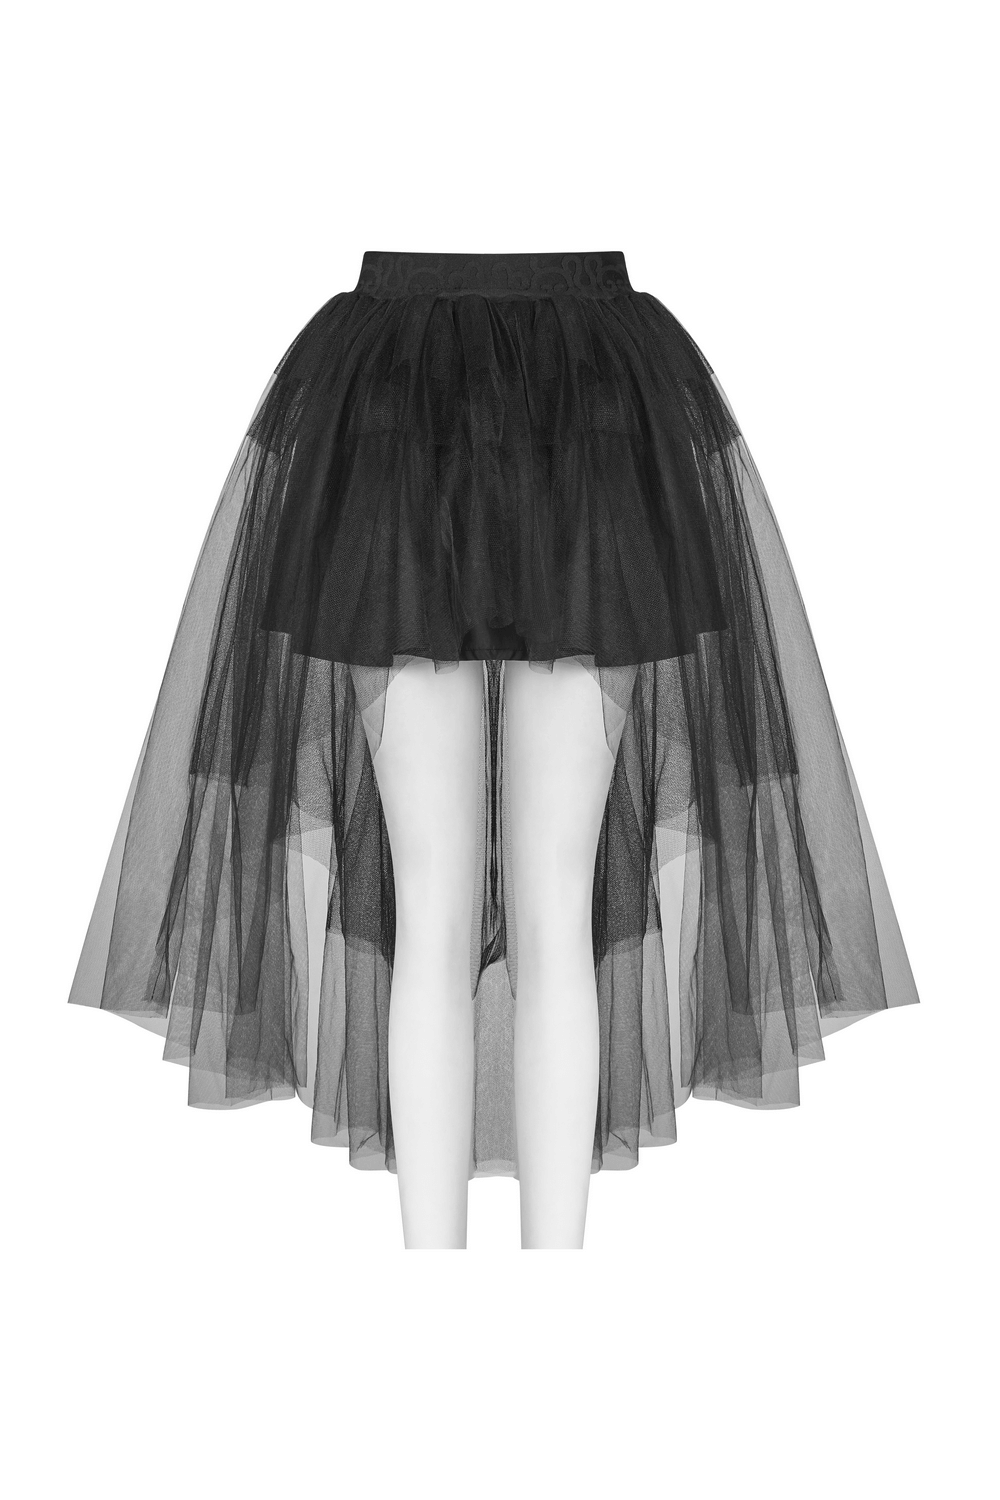 Black Gothic Punk Rave Mesh Victorian Skirt Bustle